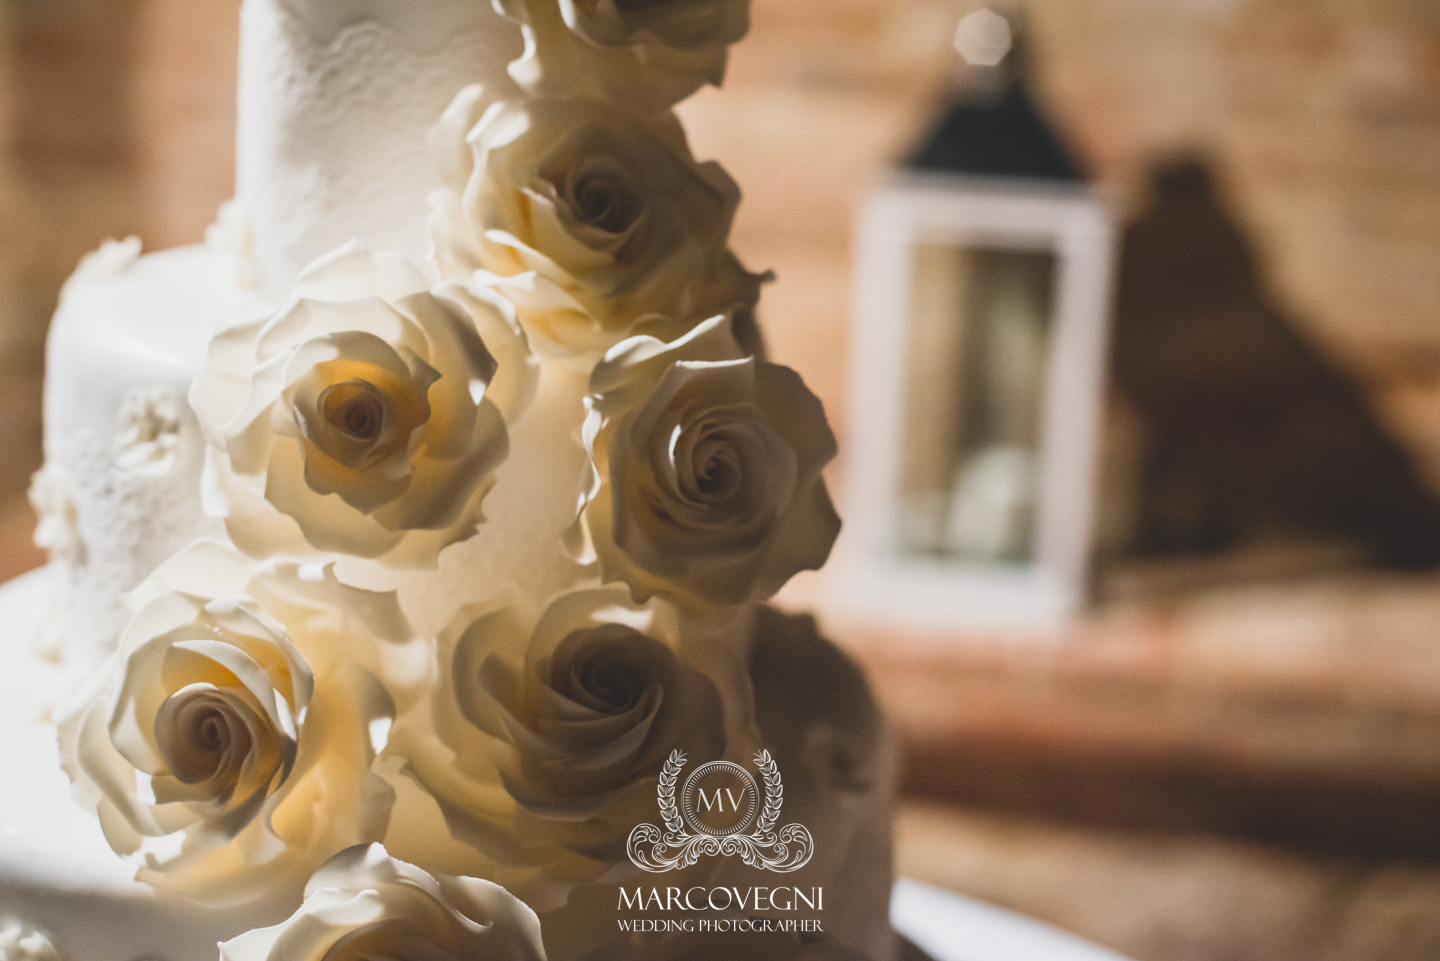 The Wedding Cake in Tuscany